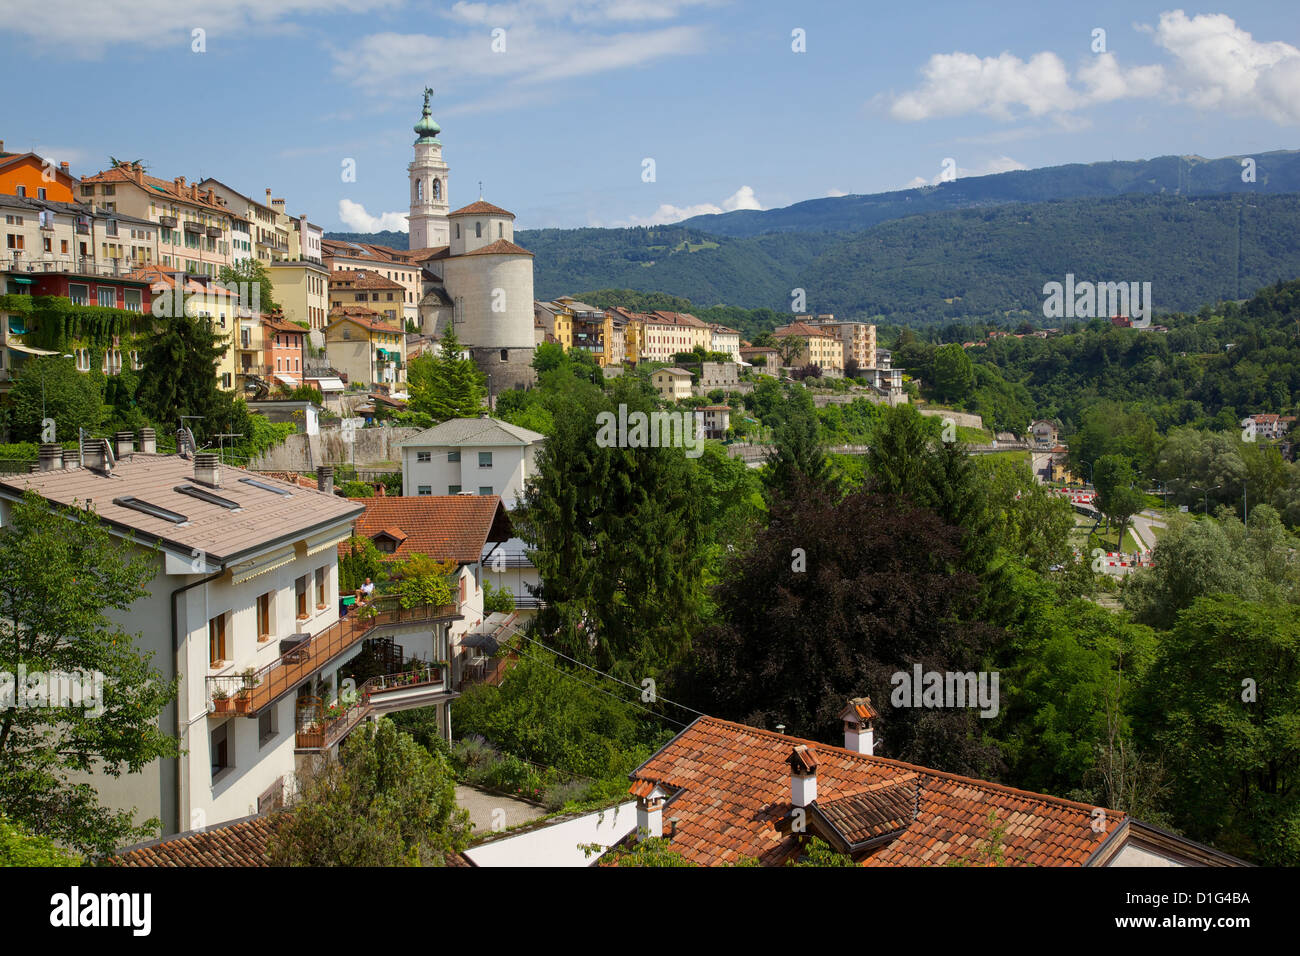 Vue de la ville et du Duomo de San Martino, Belluno, province de Belluno, Vénétie, Italie, Europe Banque D'Images